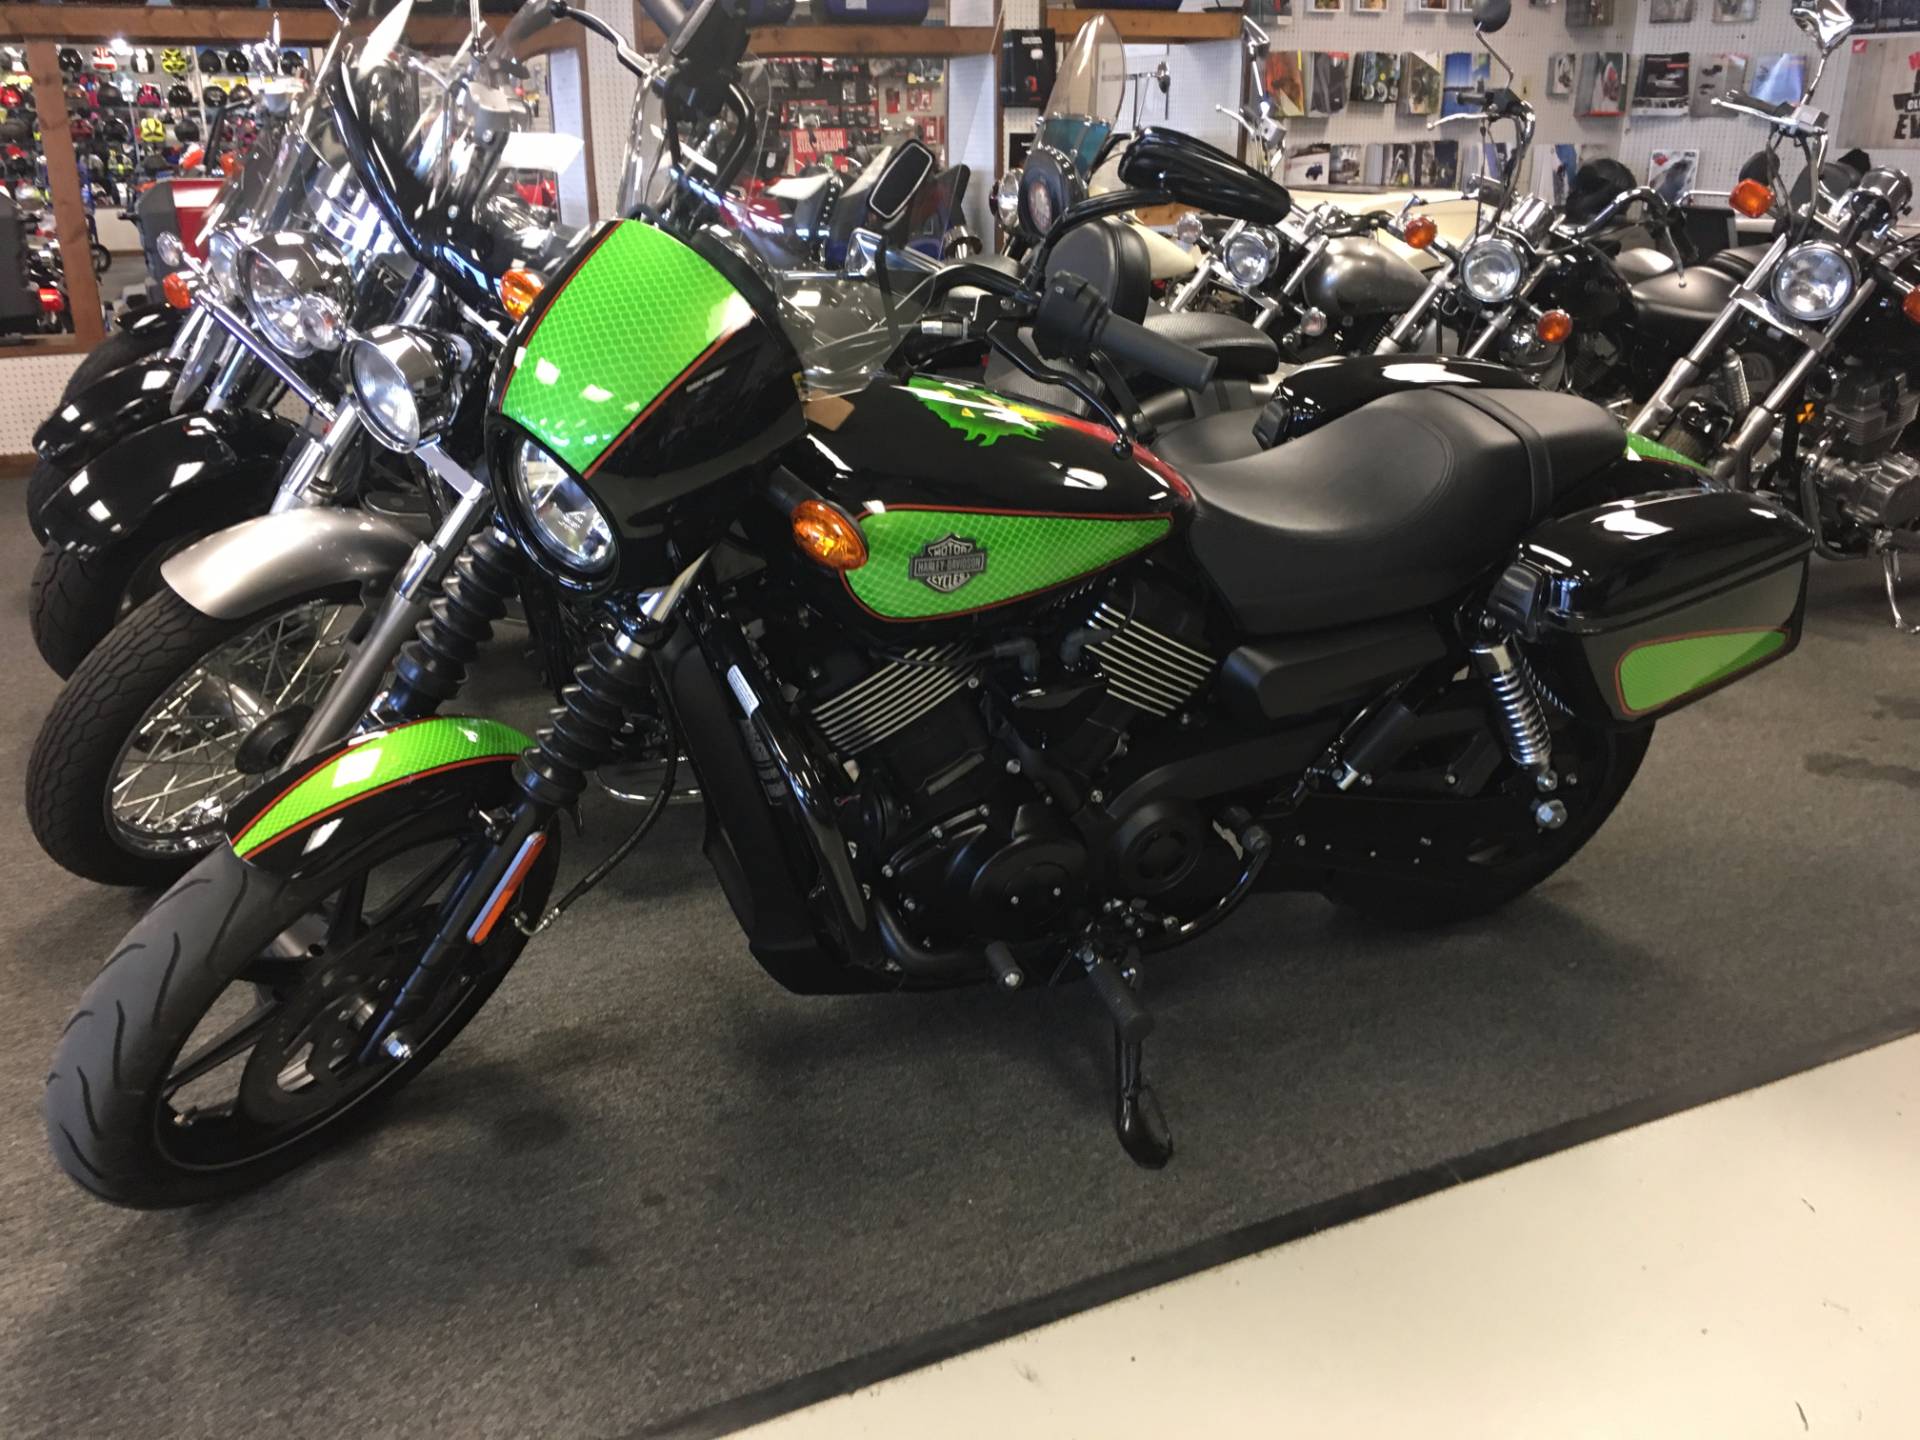 Used 2015 Harley-Davidson Street™ 750 Motorcycles in Elkhart, IN ...